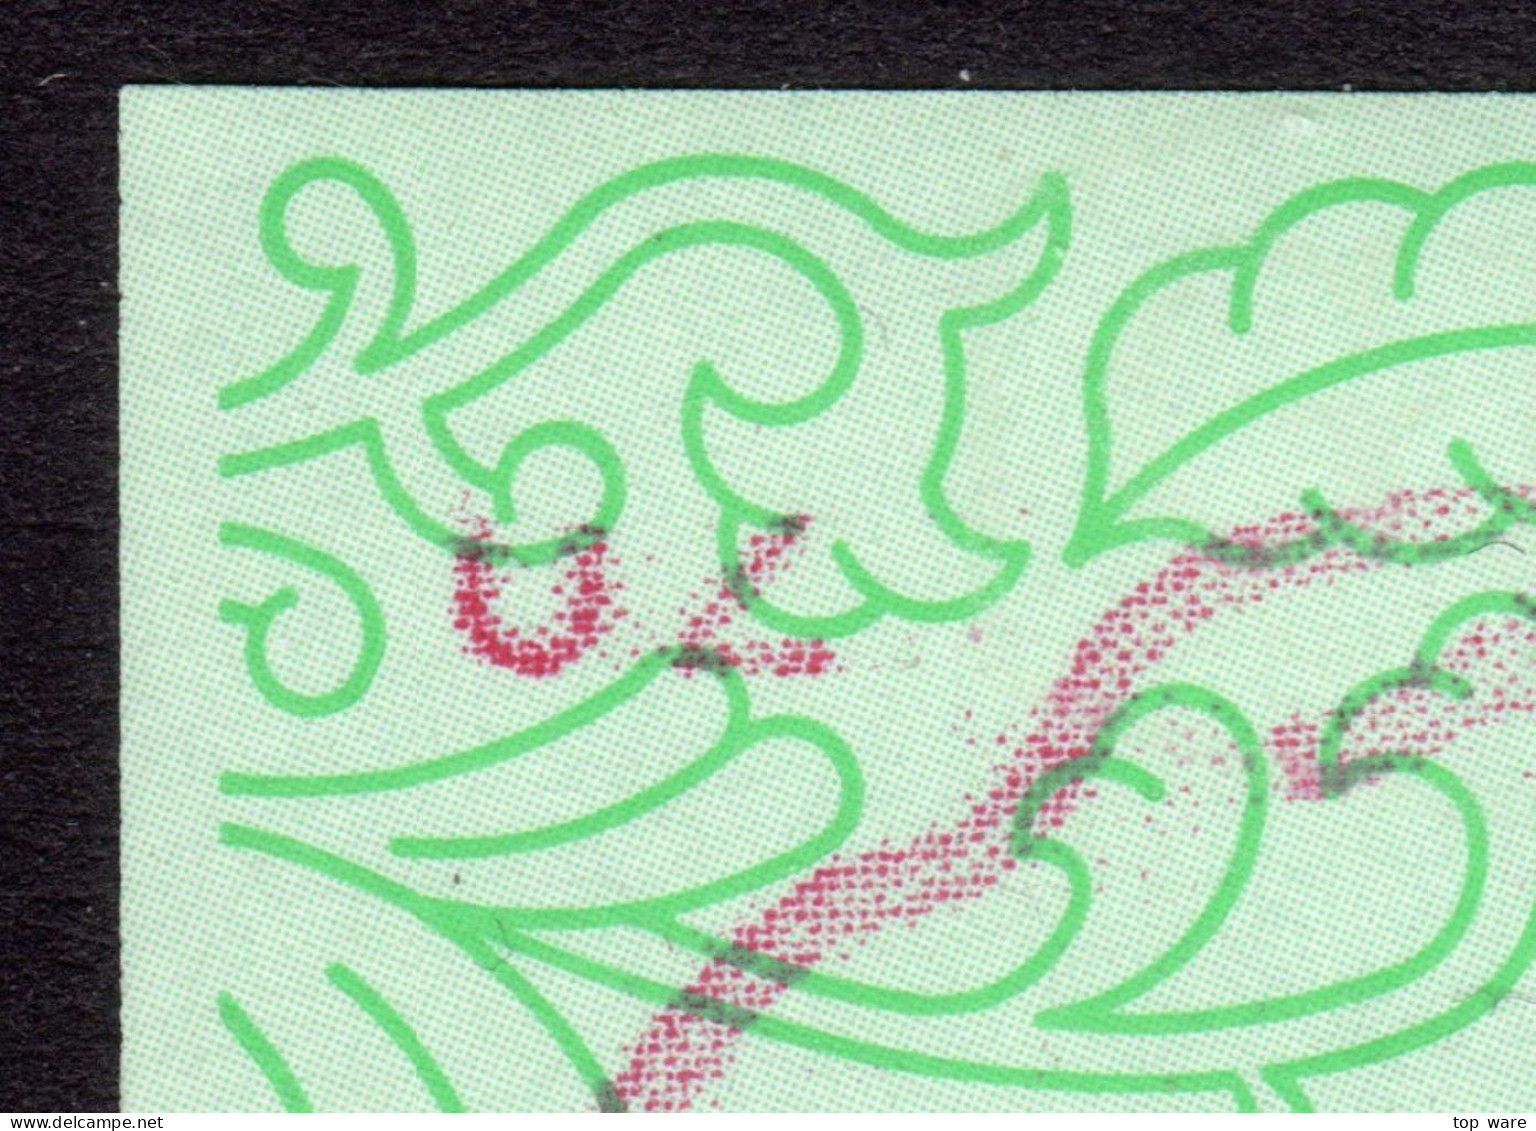 Hong Kong China ATM Stamps / 1987 / Zodiac Rabbit 02 / Error Print MNH Frama Nagler Klussendorf CVP Automatenmarken - Distributeurs